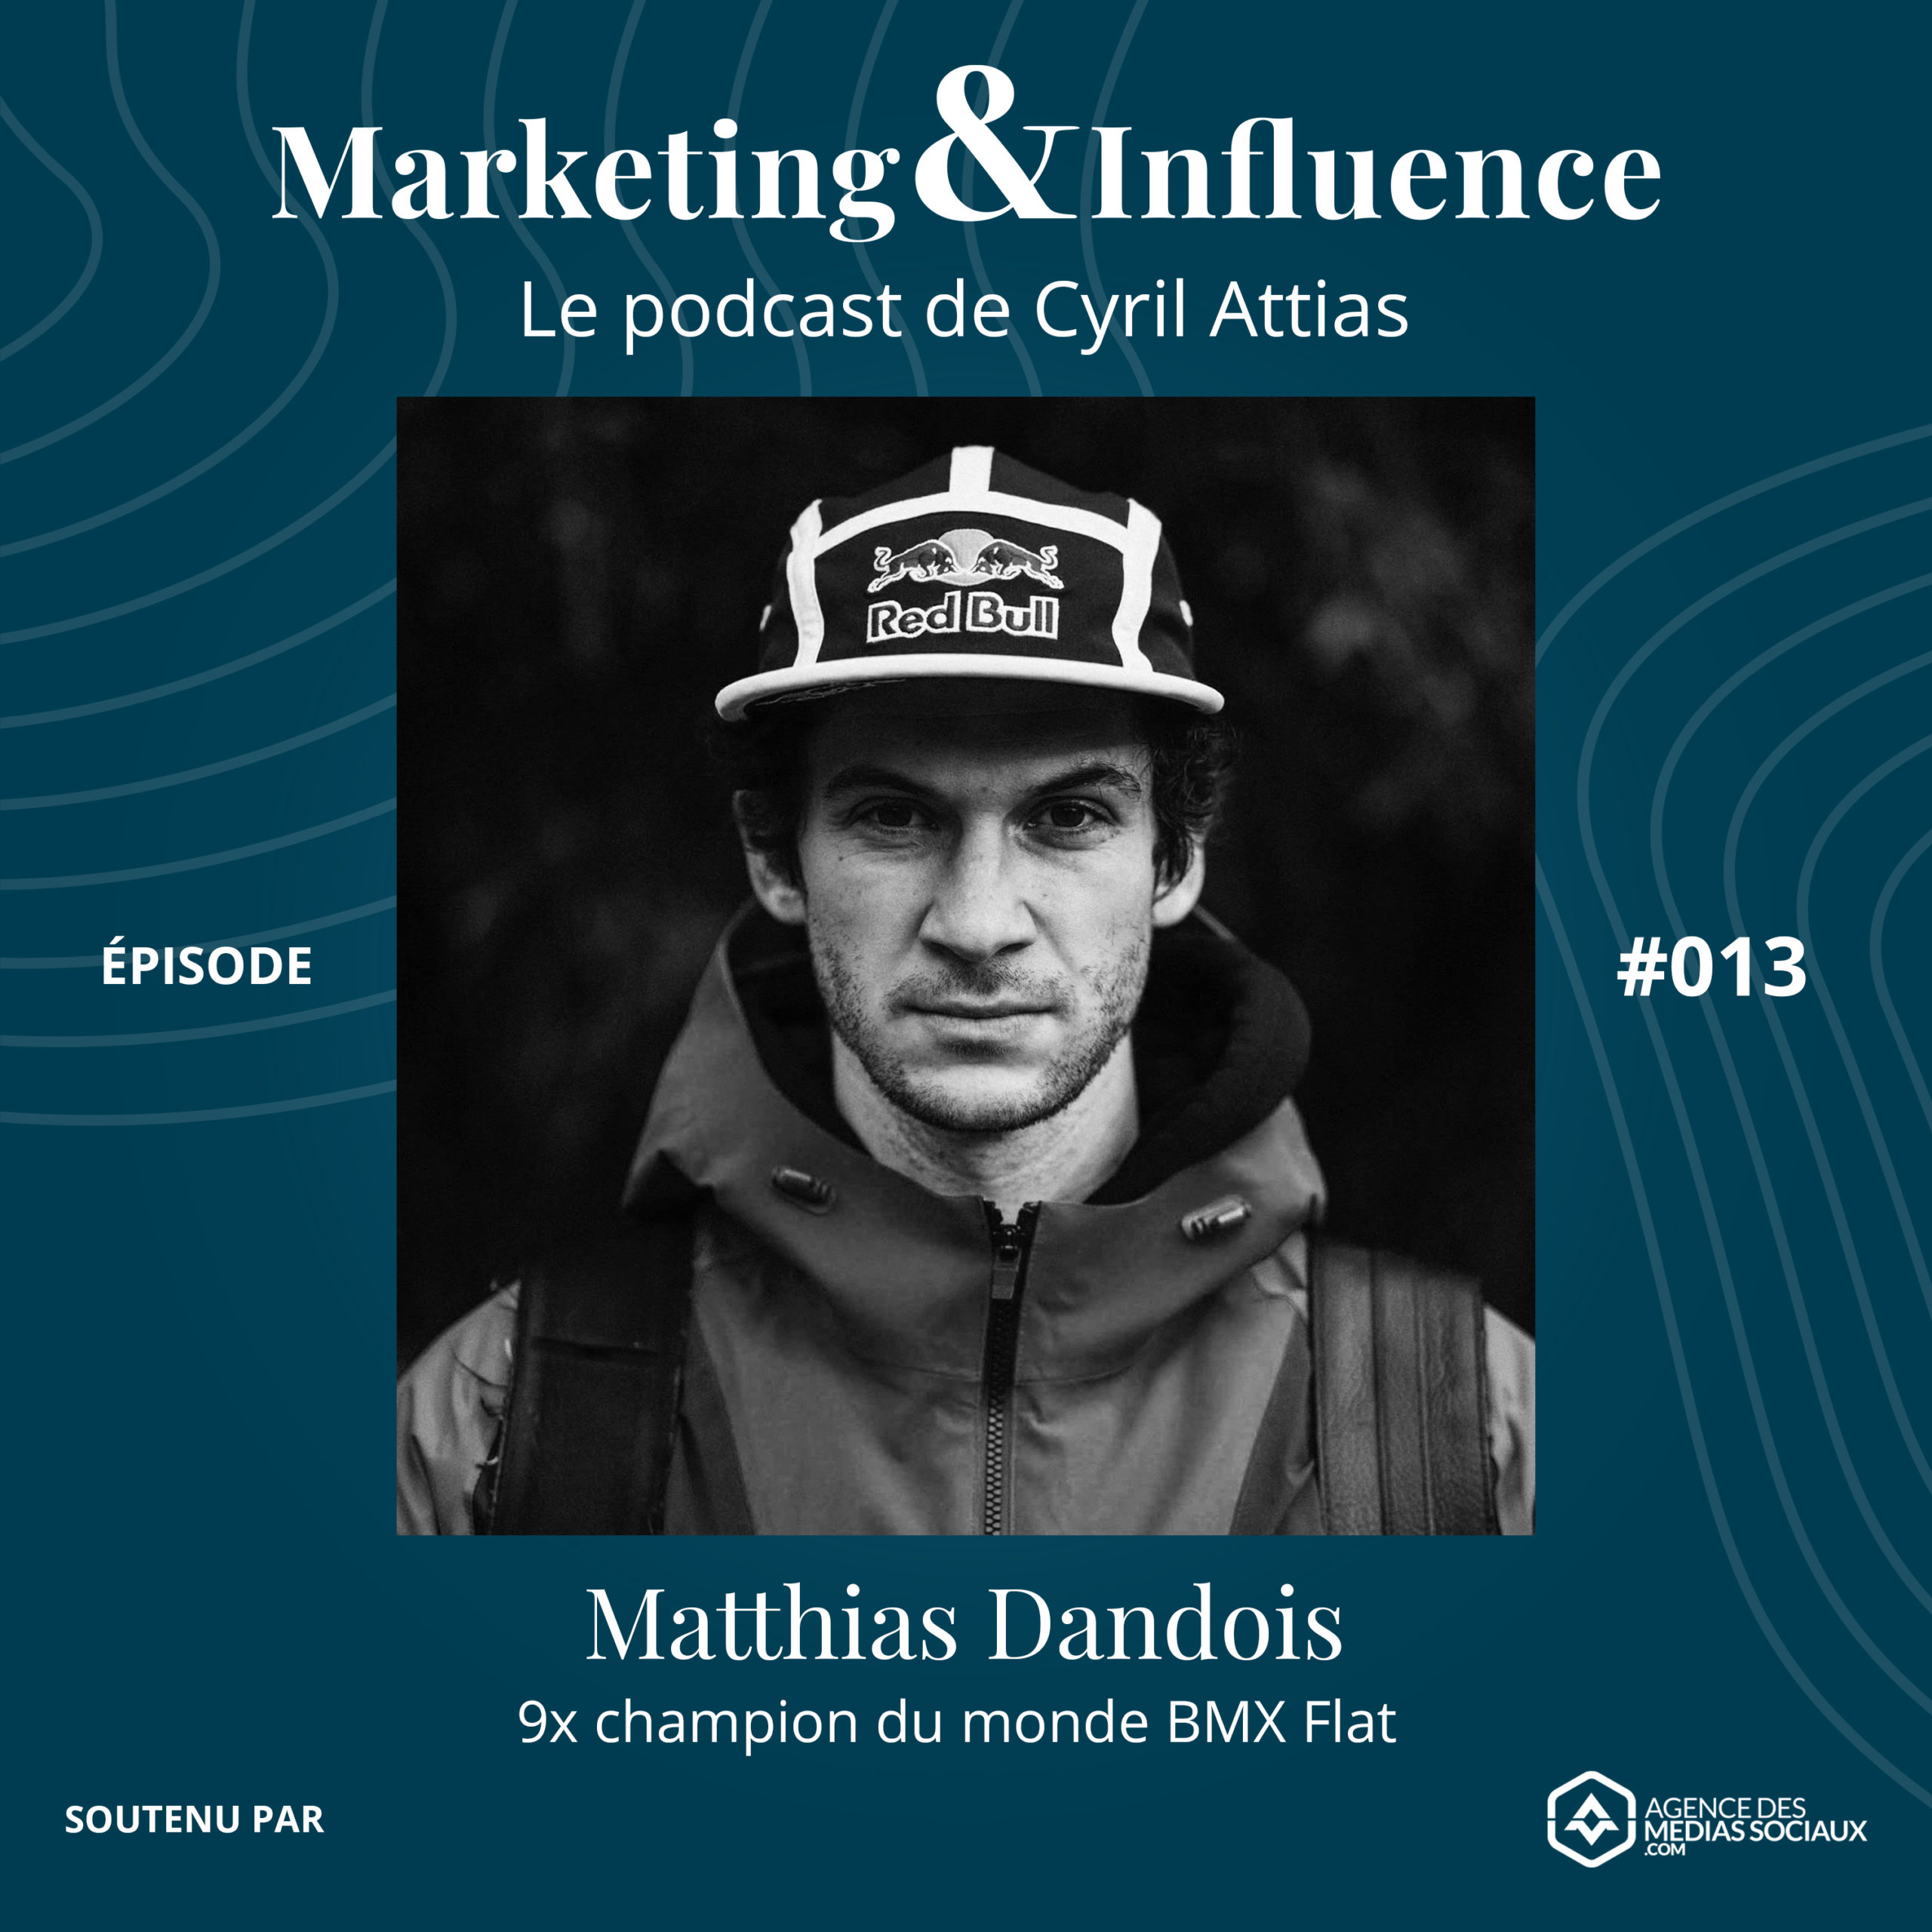 Episode-Matthias-Dandois-Influenceur-podcast-cyril-attias-marketing-influence